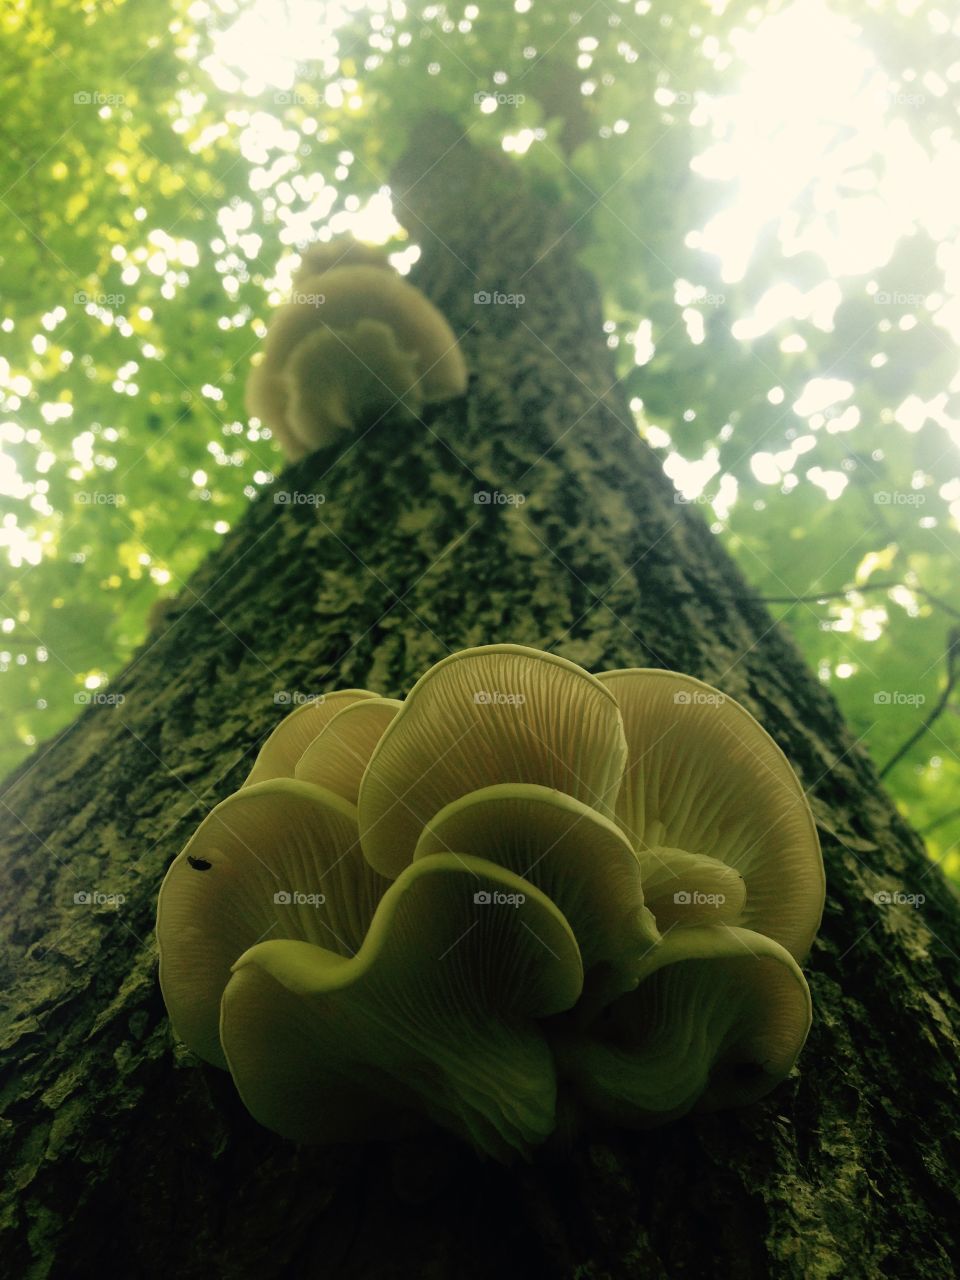 Mushrooms up a tree